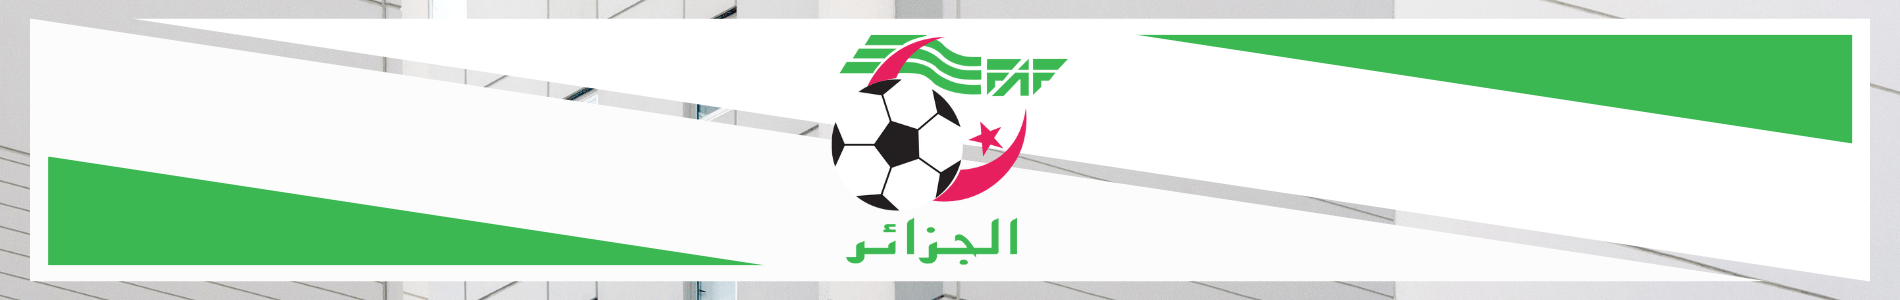 Algeria football jersey